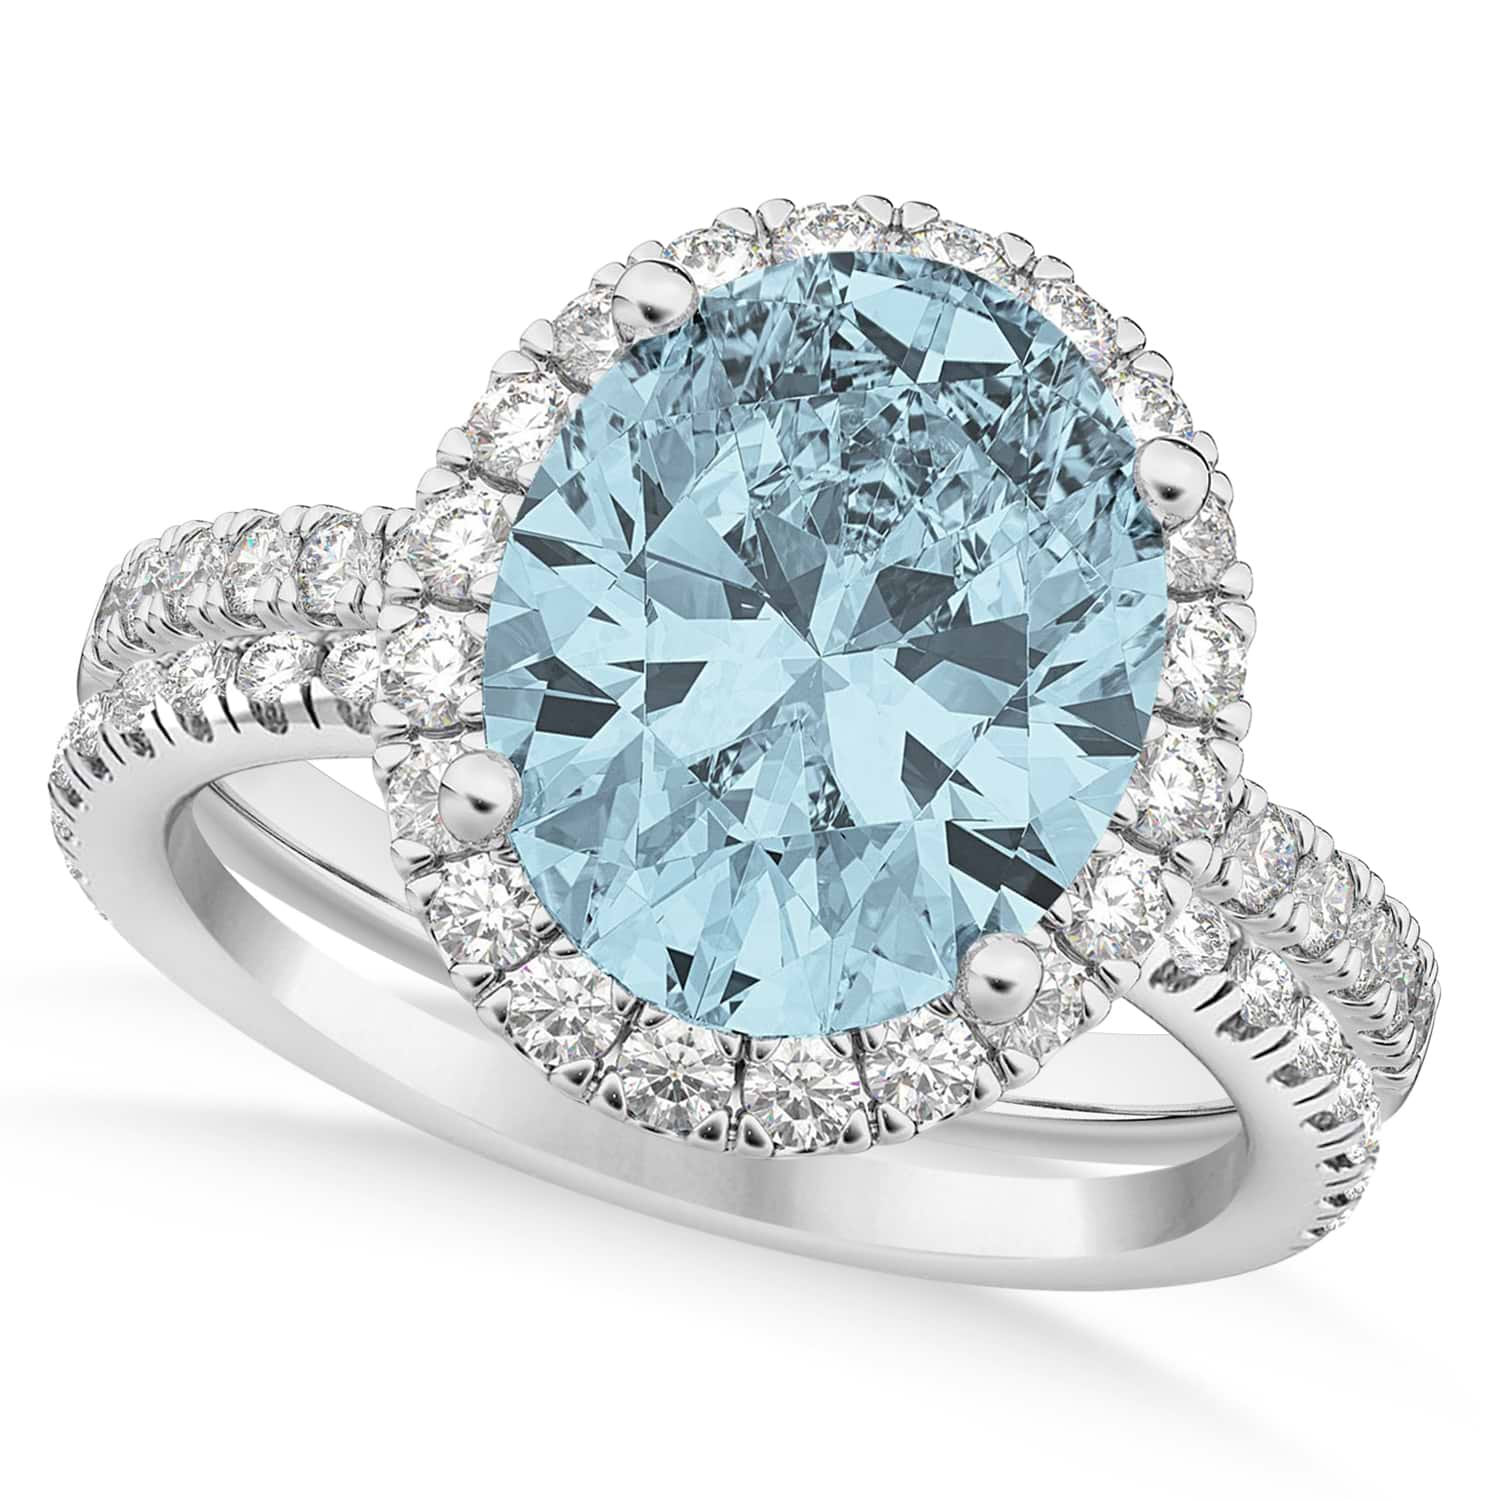 Aquamarine & Diamonds Oval-Cut Halo Bridal Set 14K White Gold (3.03ct)